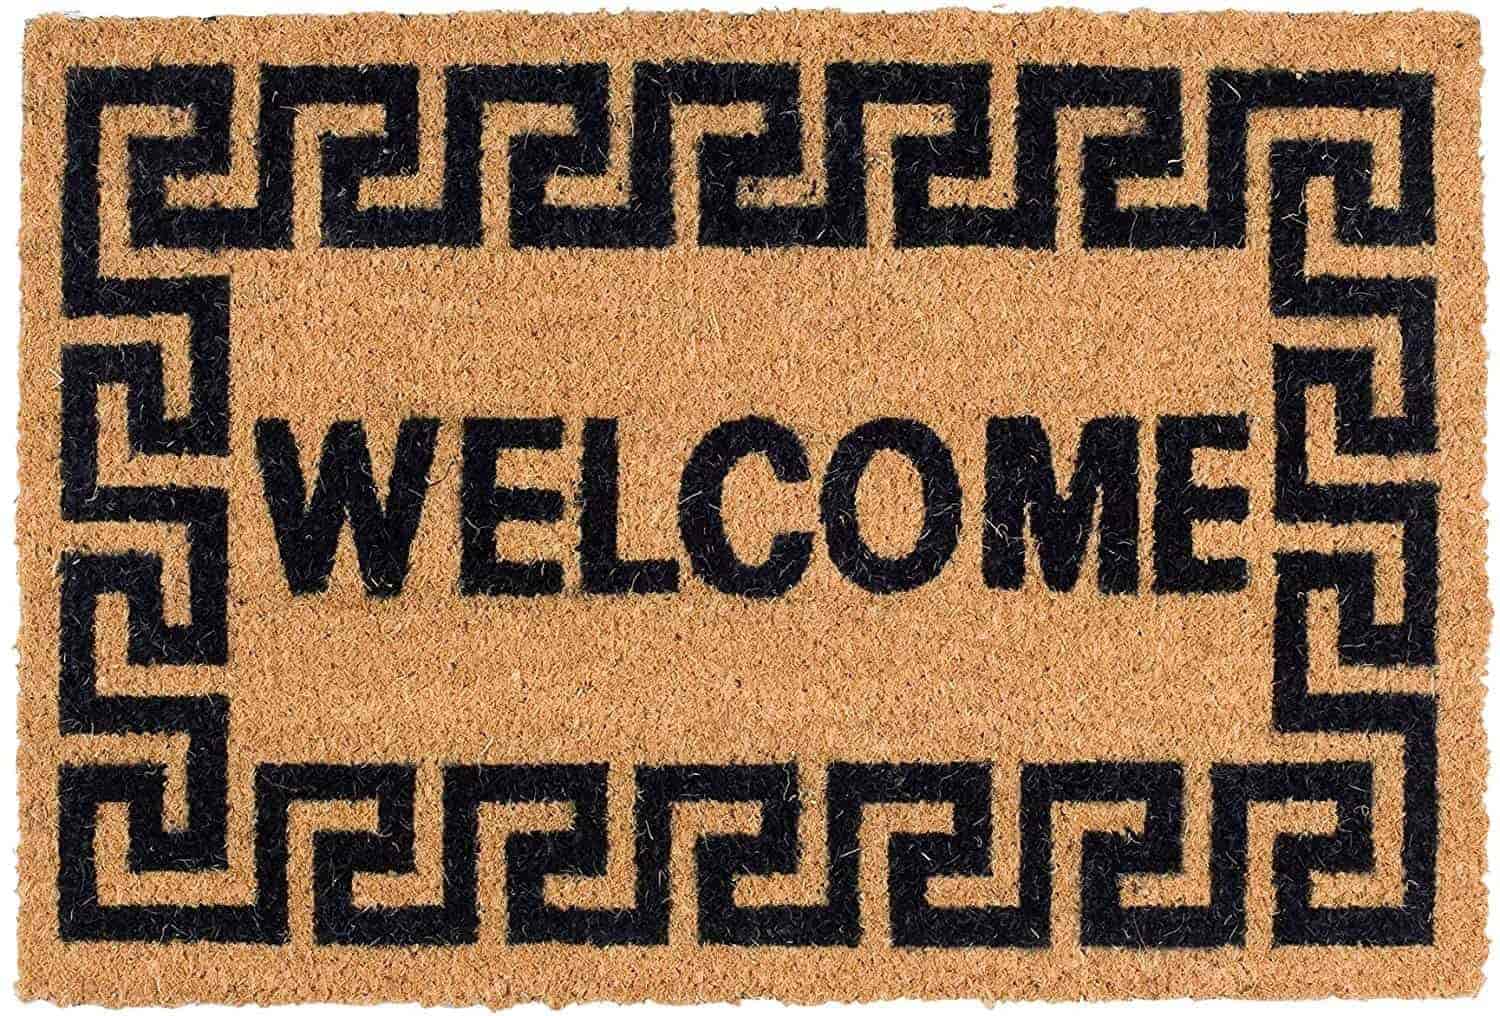 Dandy Kentwell PVC Backed Coir Message Indoor/Outdoor Mats 60 x 40cm Welcome/Swirls